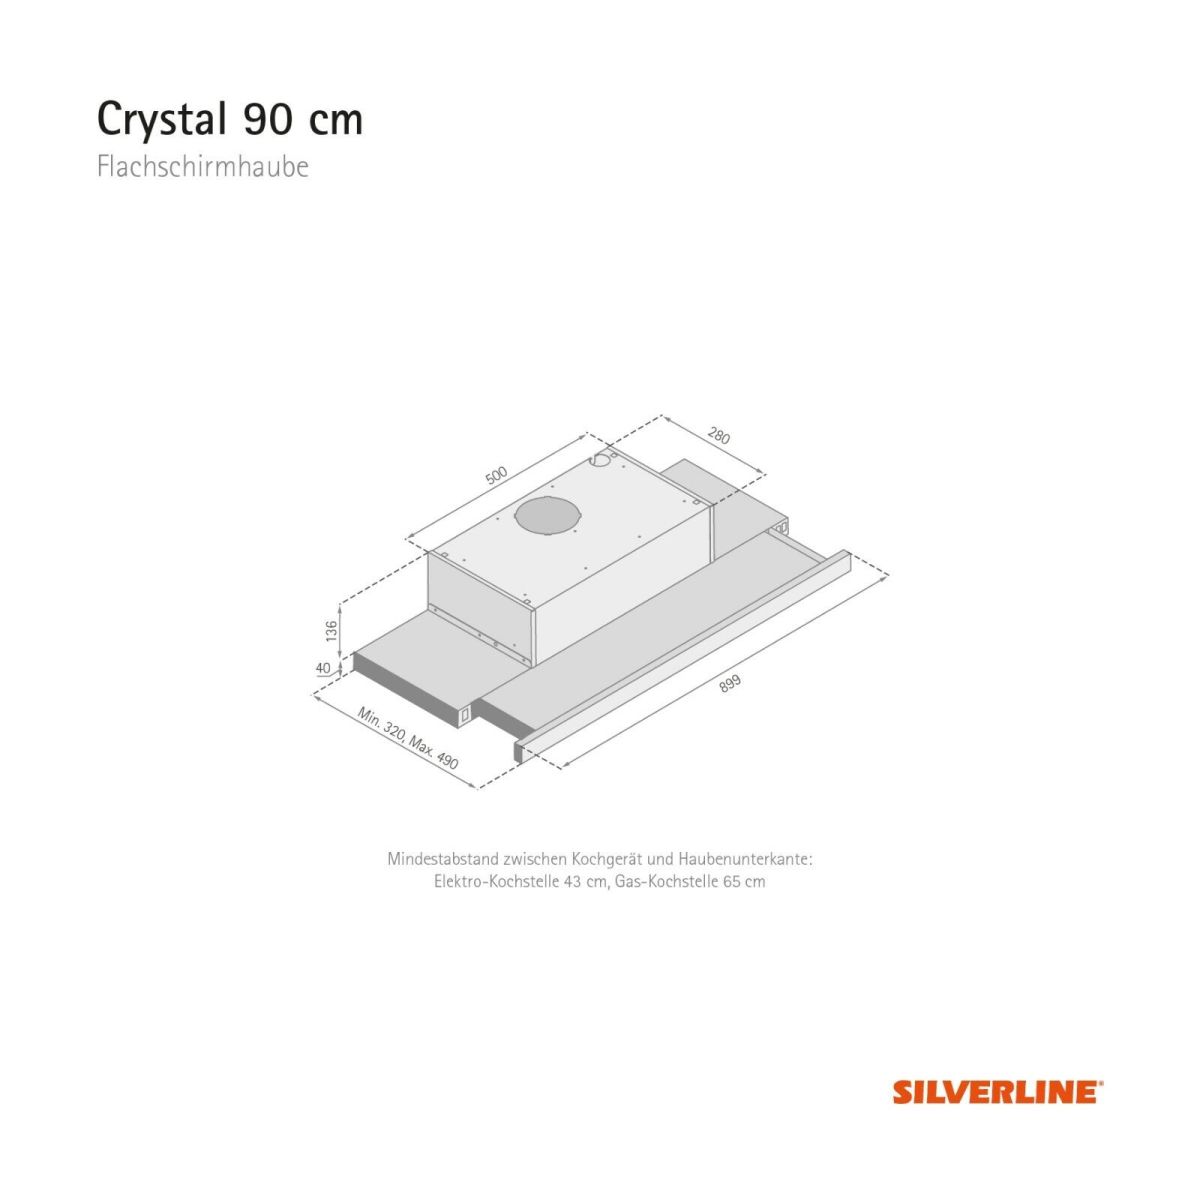 Silverline CRF 900 E Crystal Flachschirmhaube 90cm EEK:D